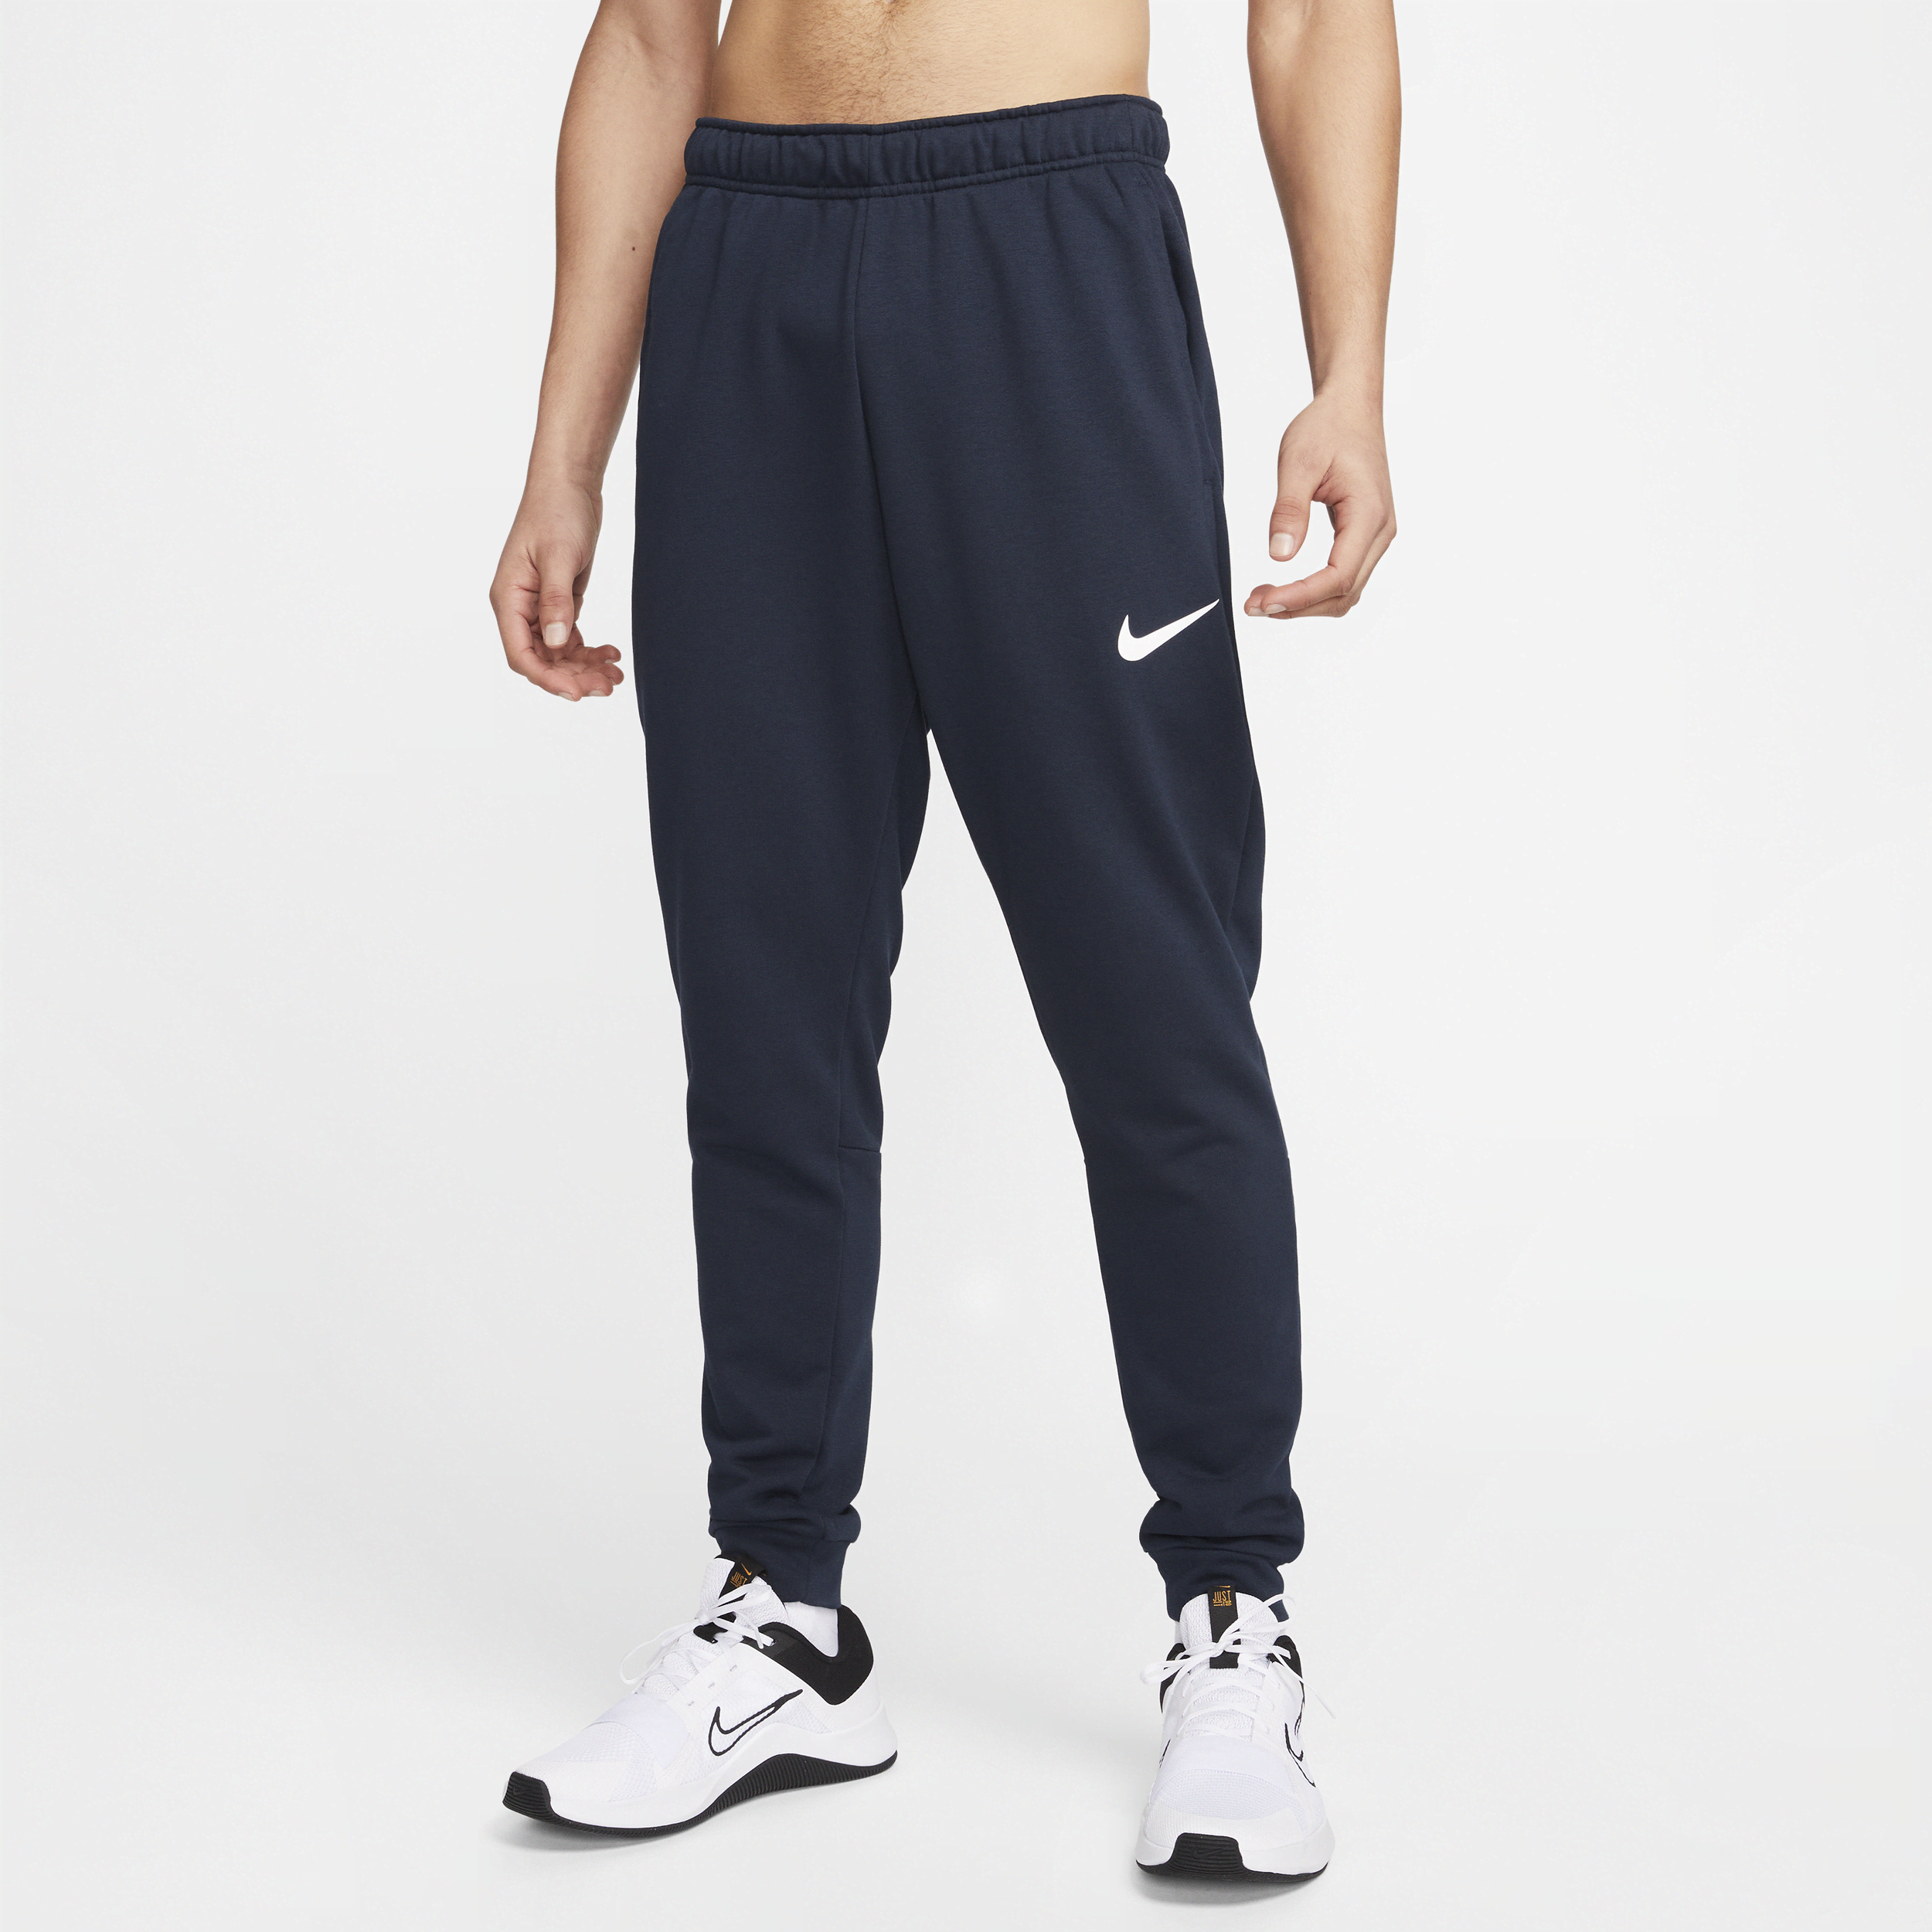 Pantaloni fitness Dri-FIT affusolati in fleece Nike Dry – Uomo - Blu